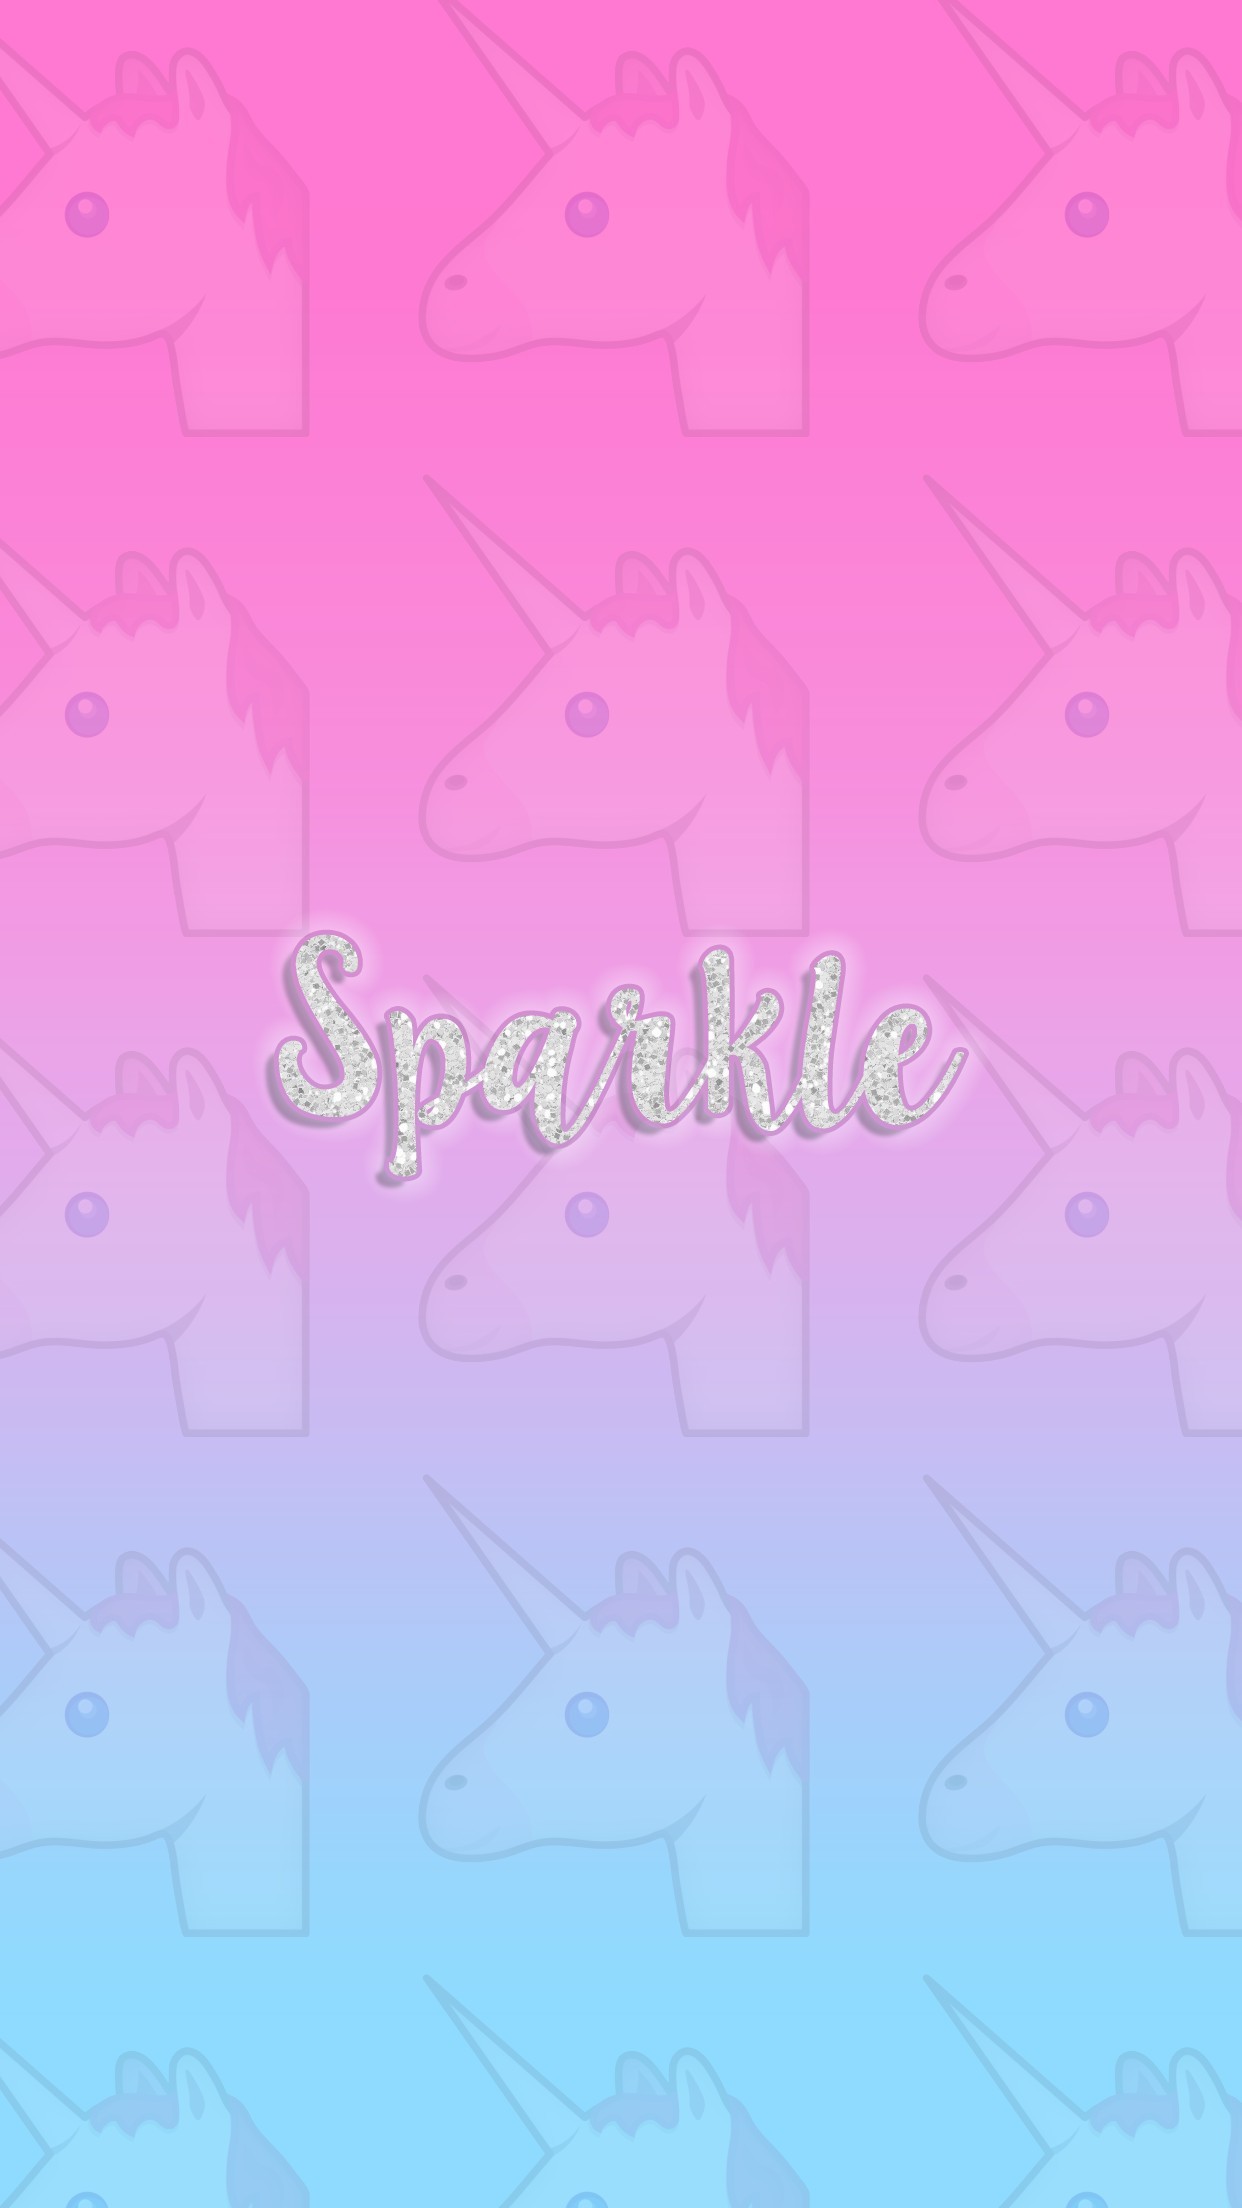 Wallpaper, background, iPhone, Android, HD, unicorn, unicorns, sparkle,